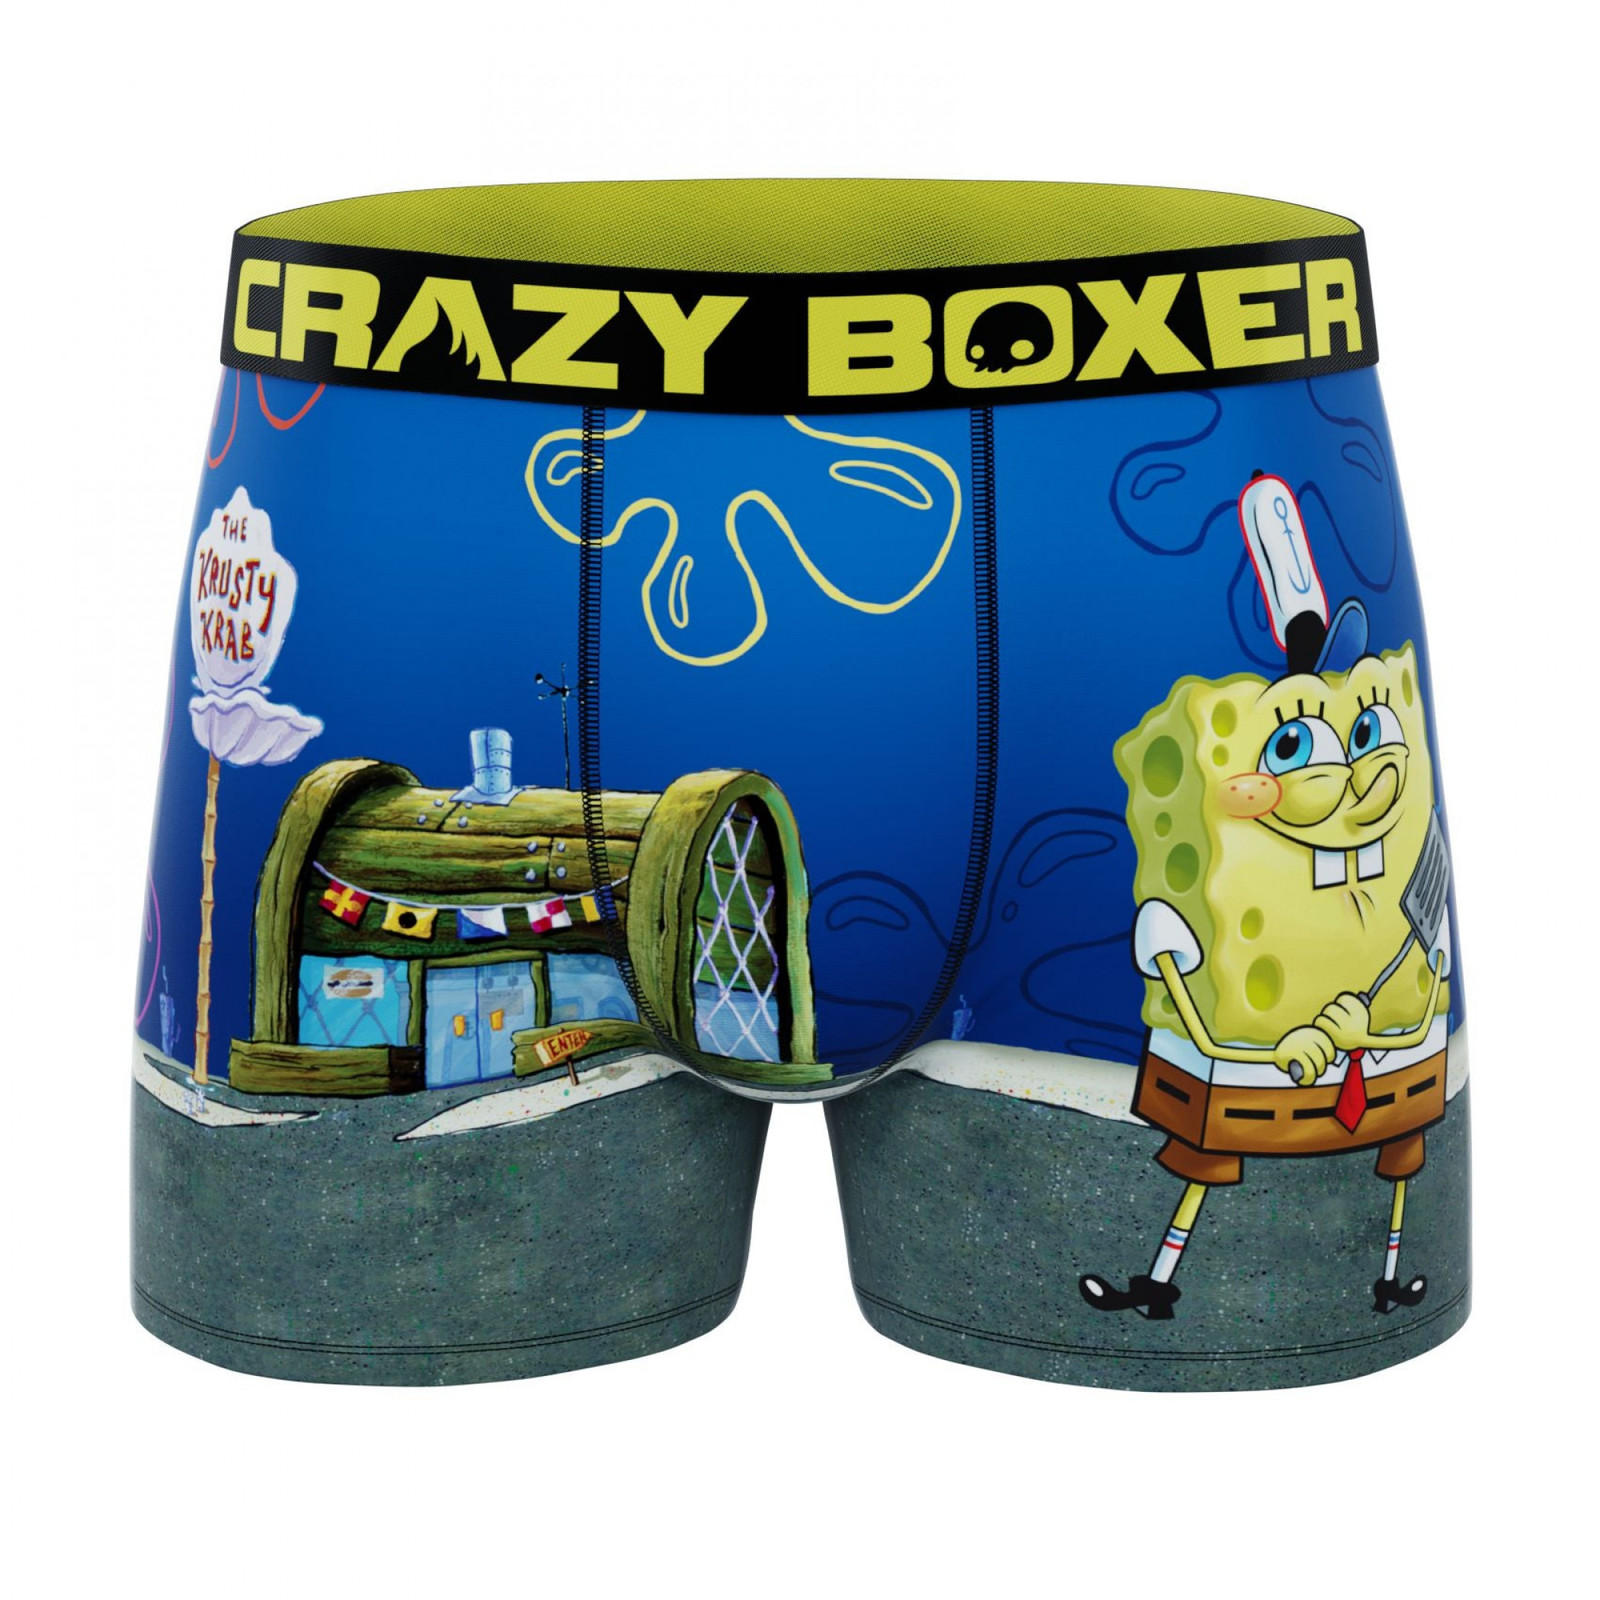 Crazy Boxer SpongeBob SquarePants All Smiles Boxer Briefs